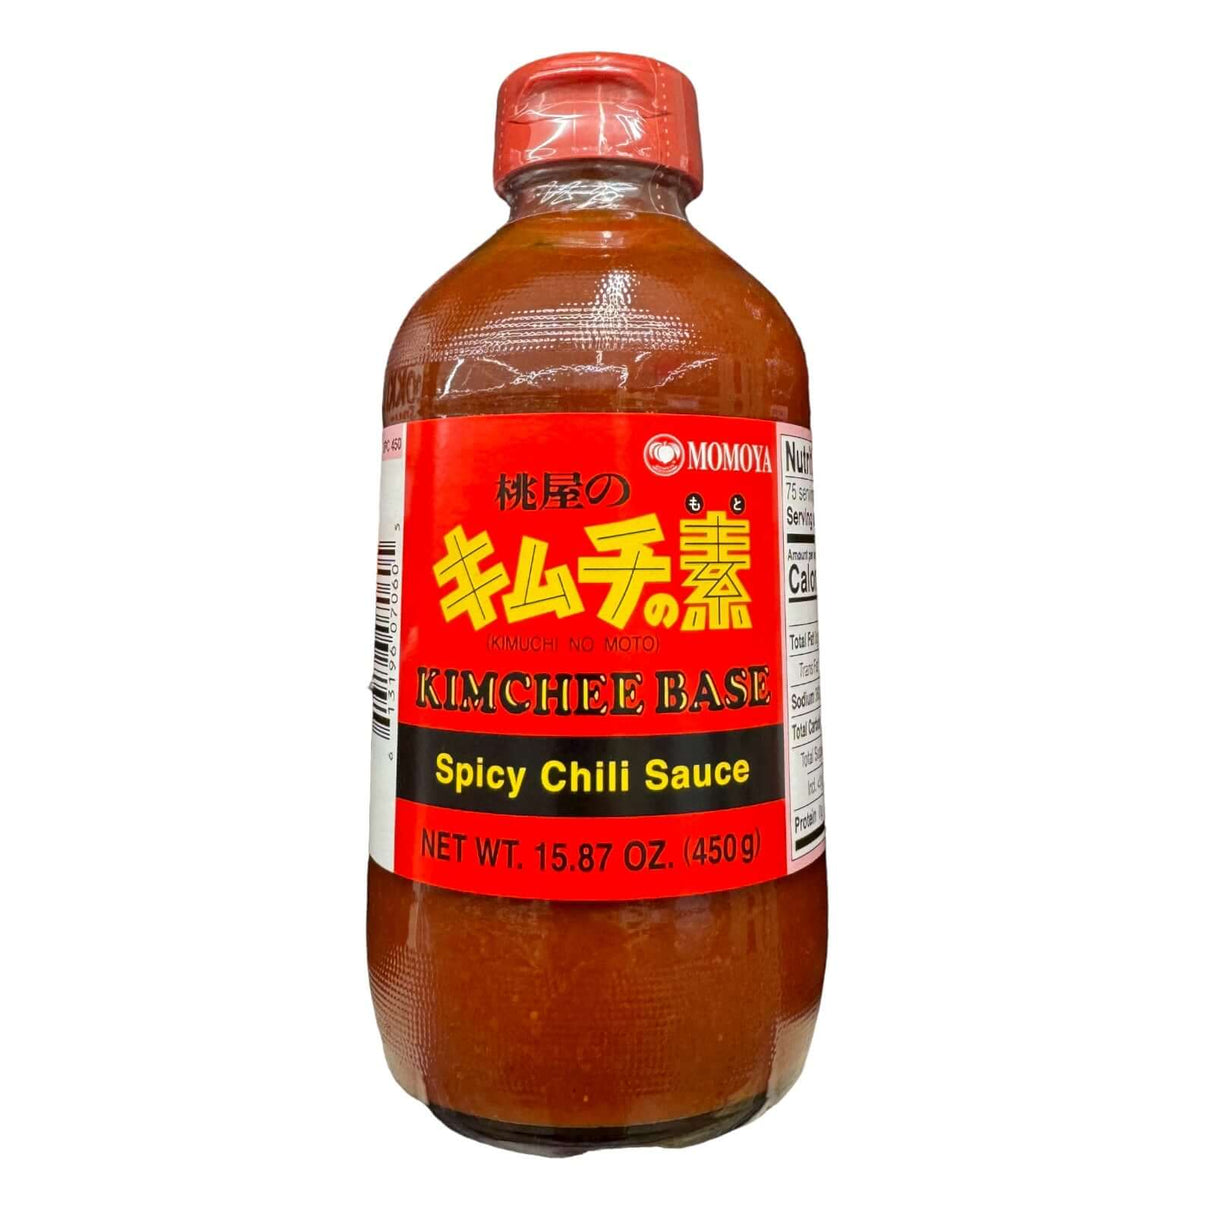 Momoya Kimchee Base Spicy Chili Sauce